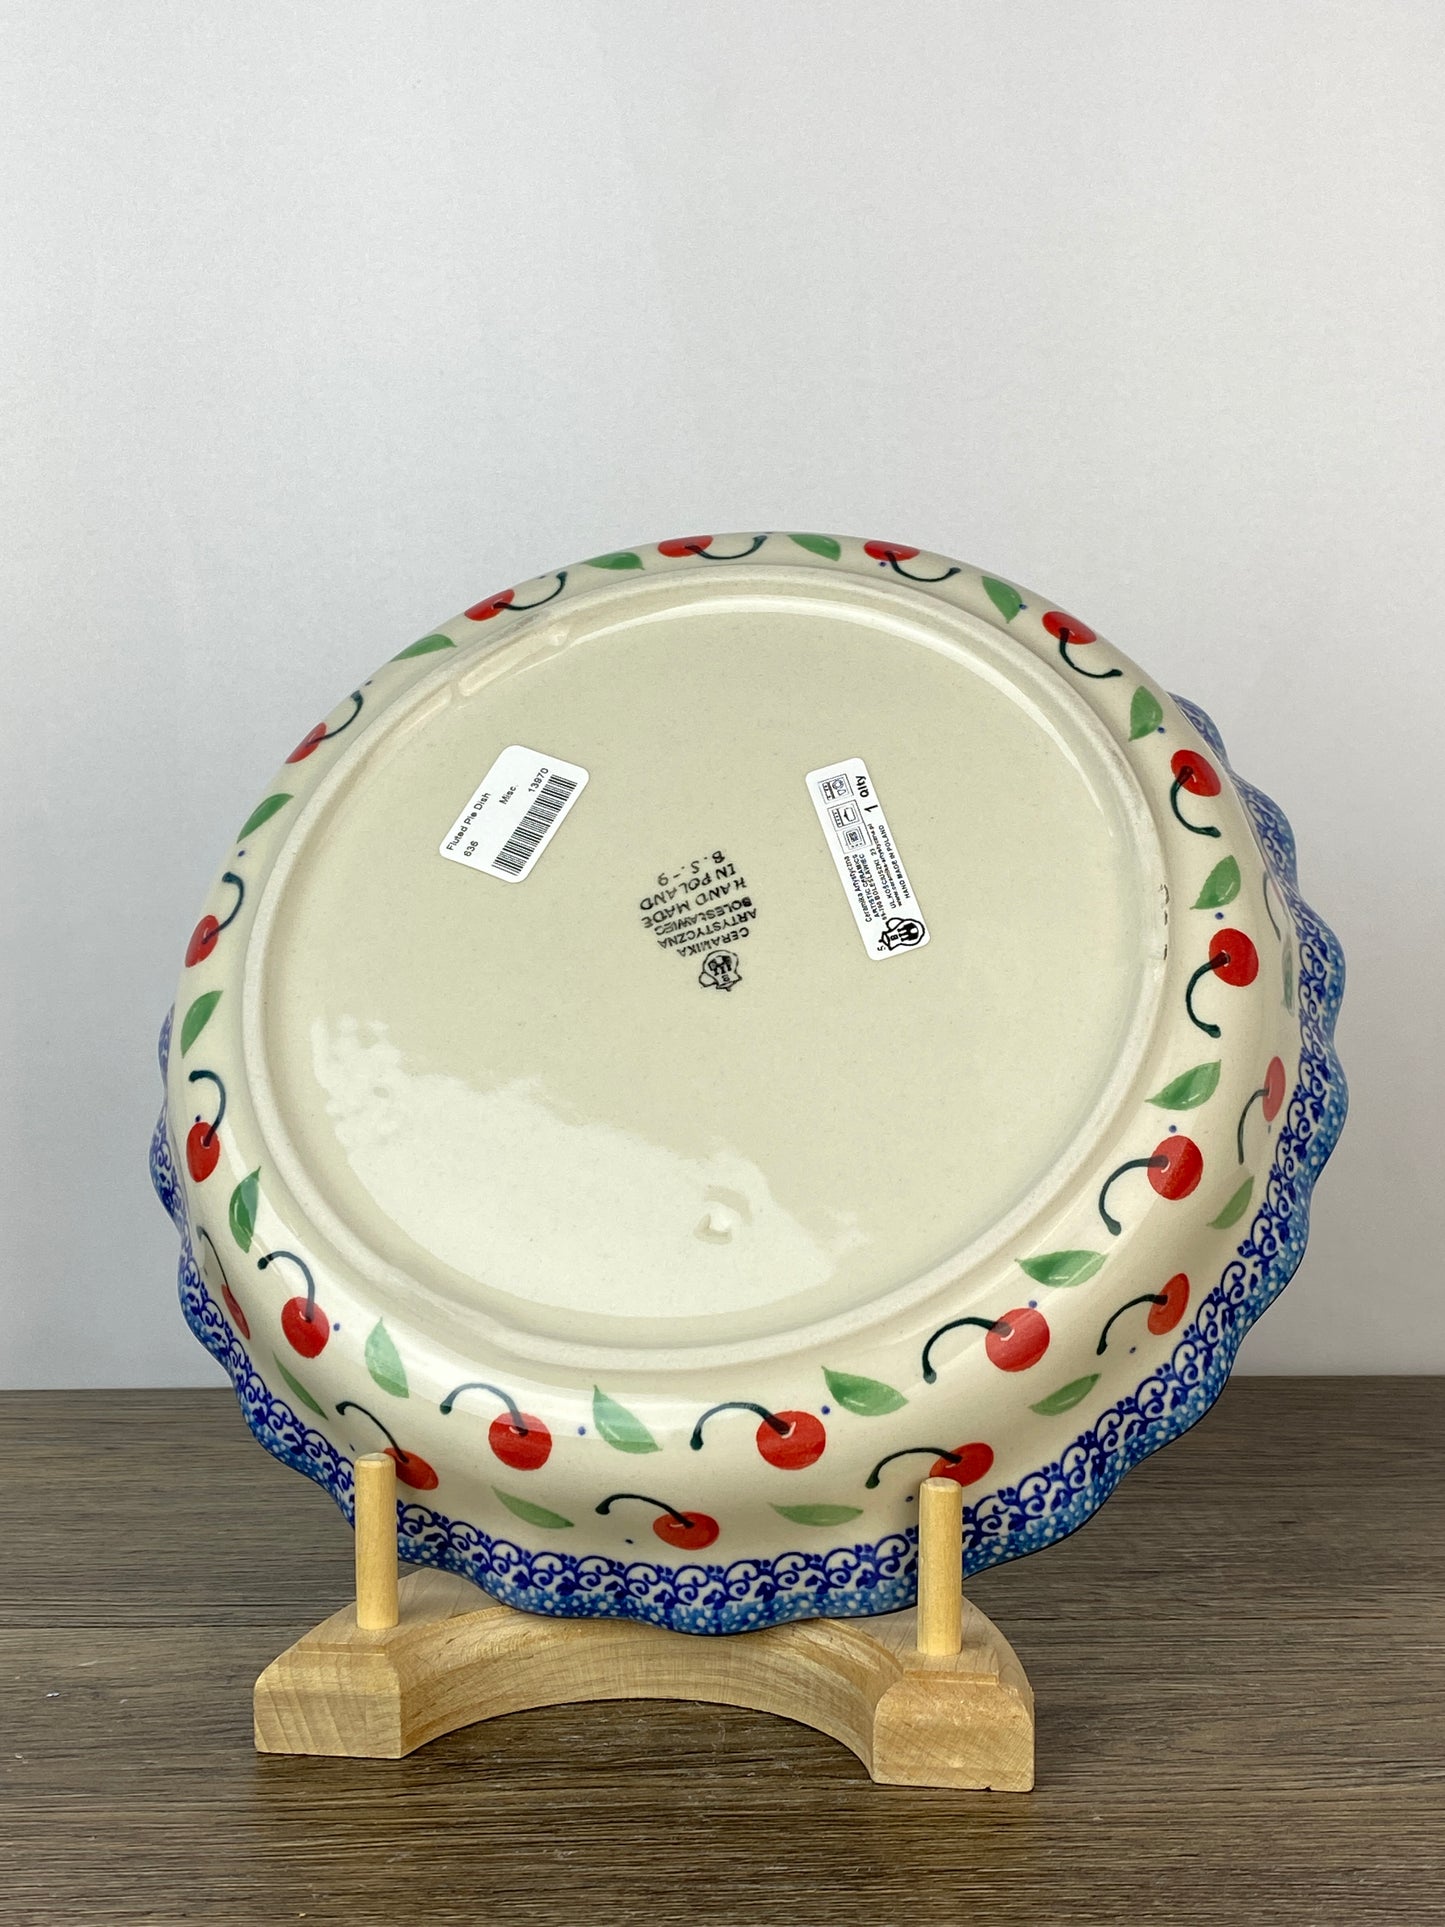 Ruffled Pie Plate / Round Baker  - Shape 636 - Pattern 2715